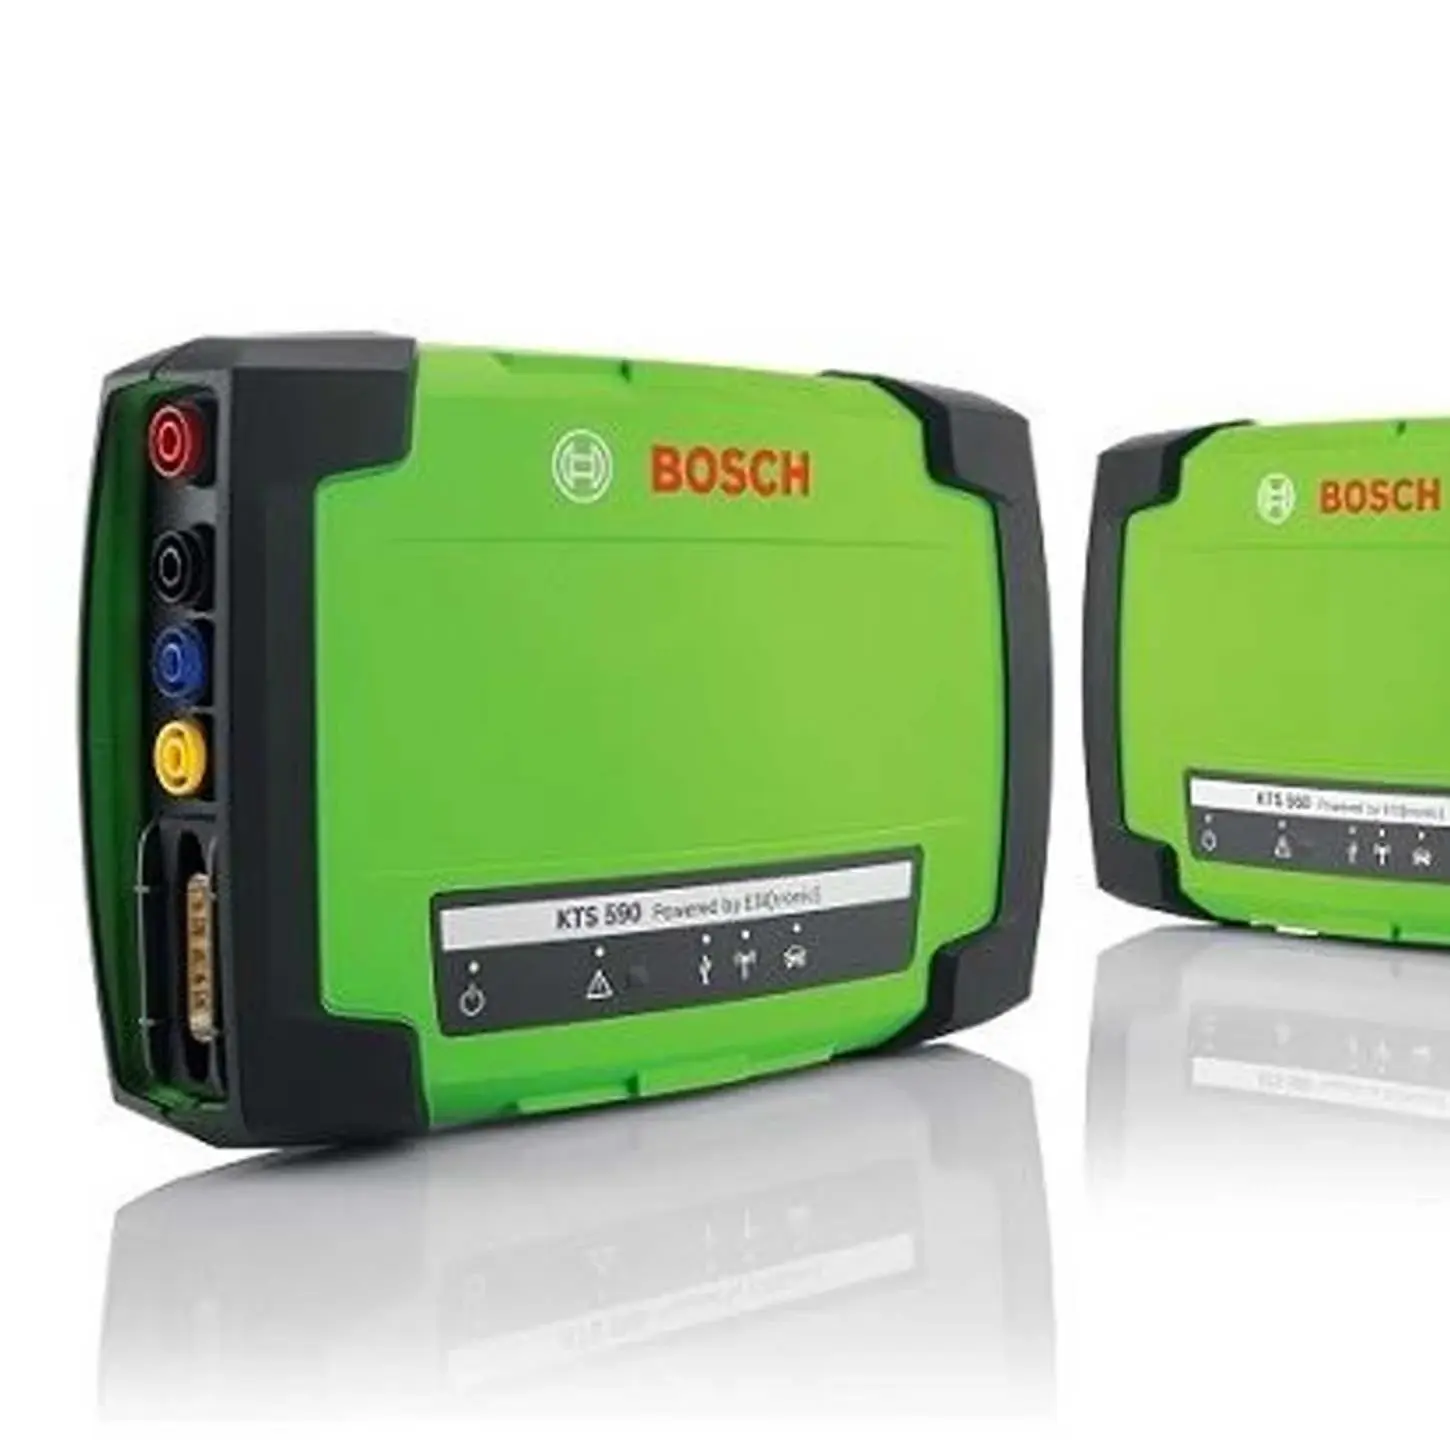 Tester diagnoza auto profesionala BOSCH KTS 560 wireless